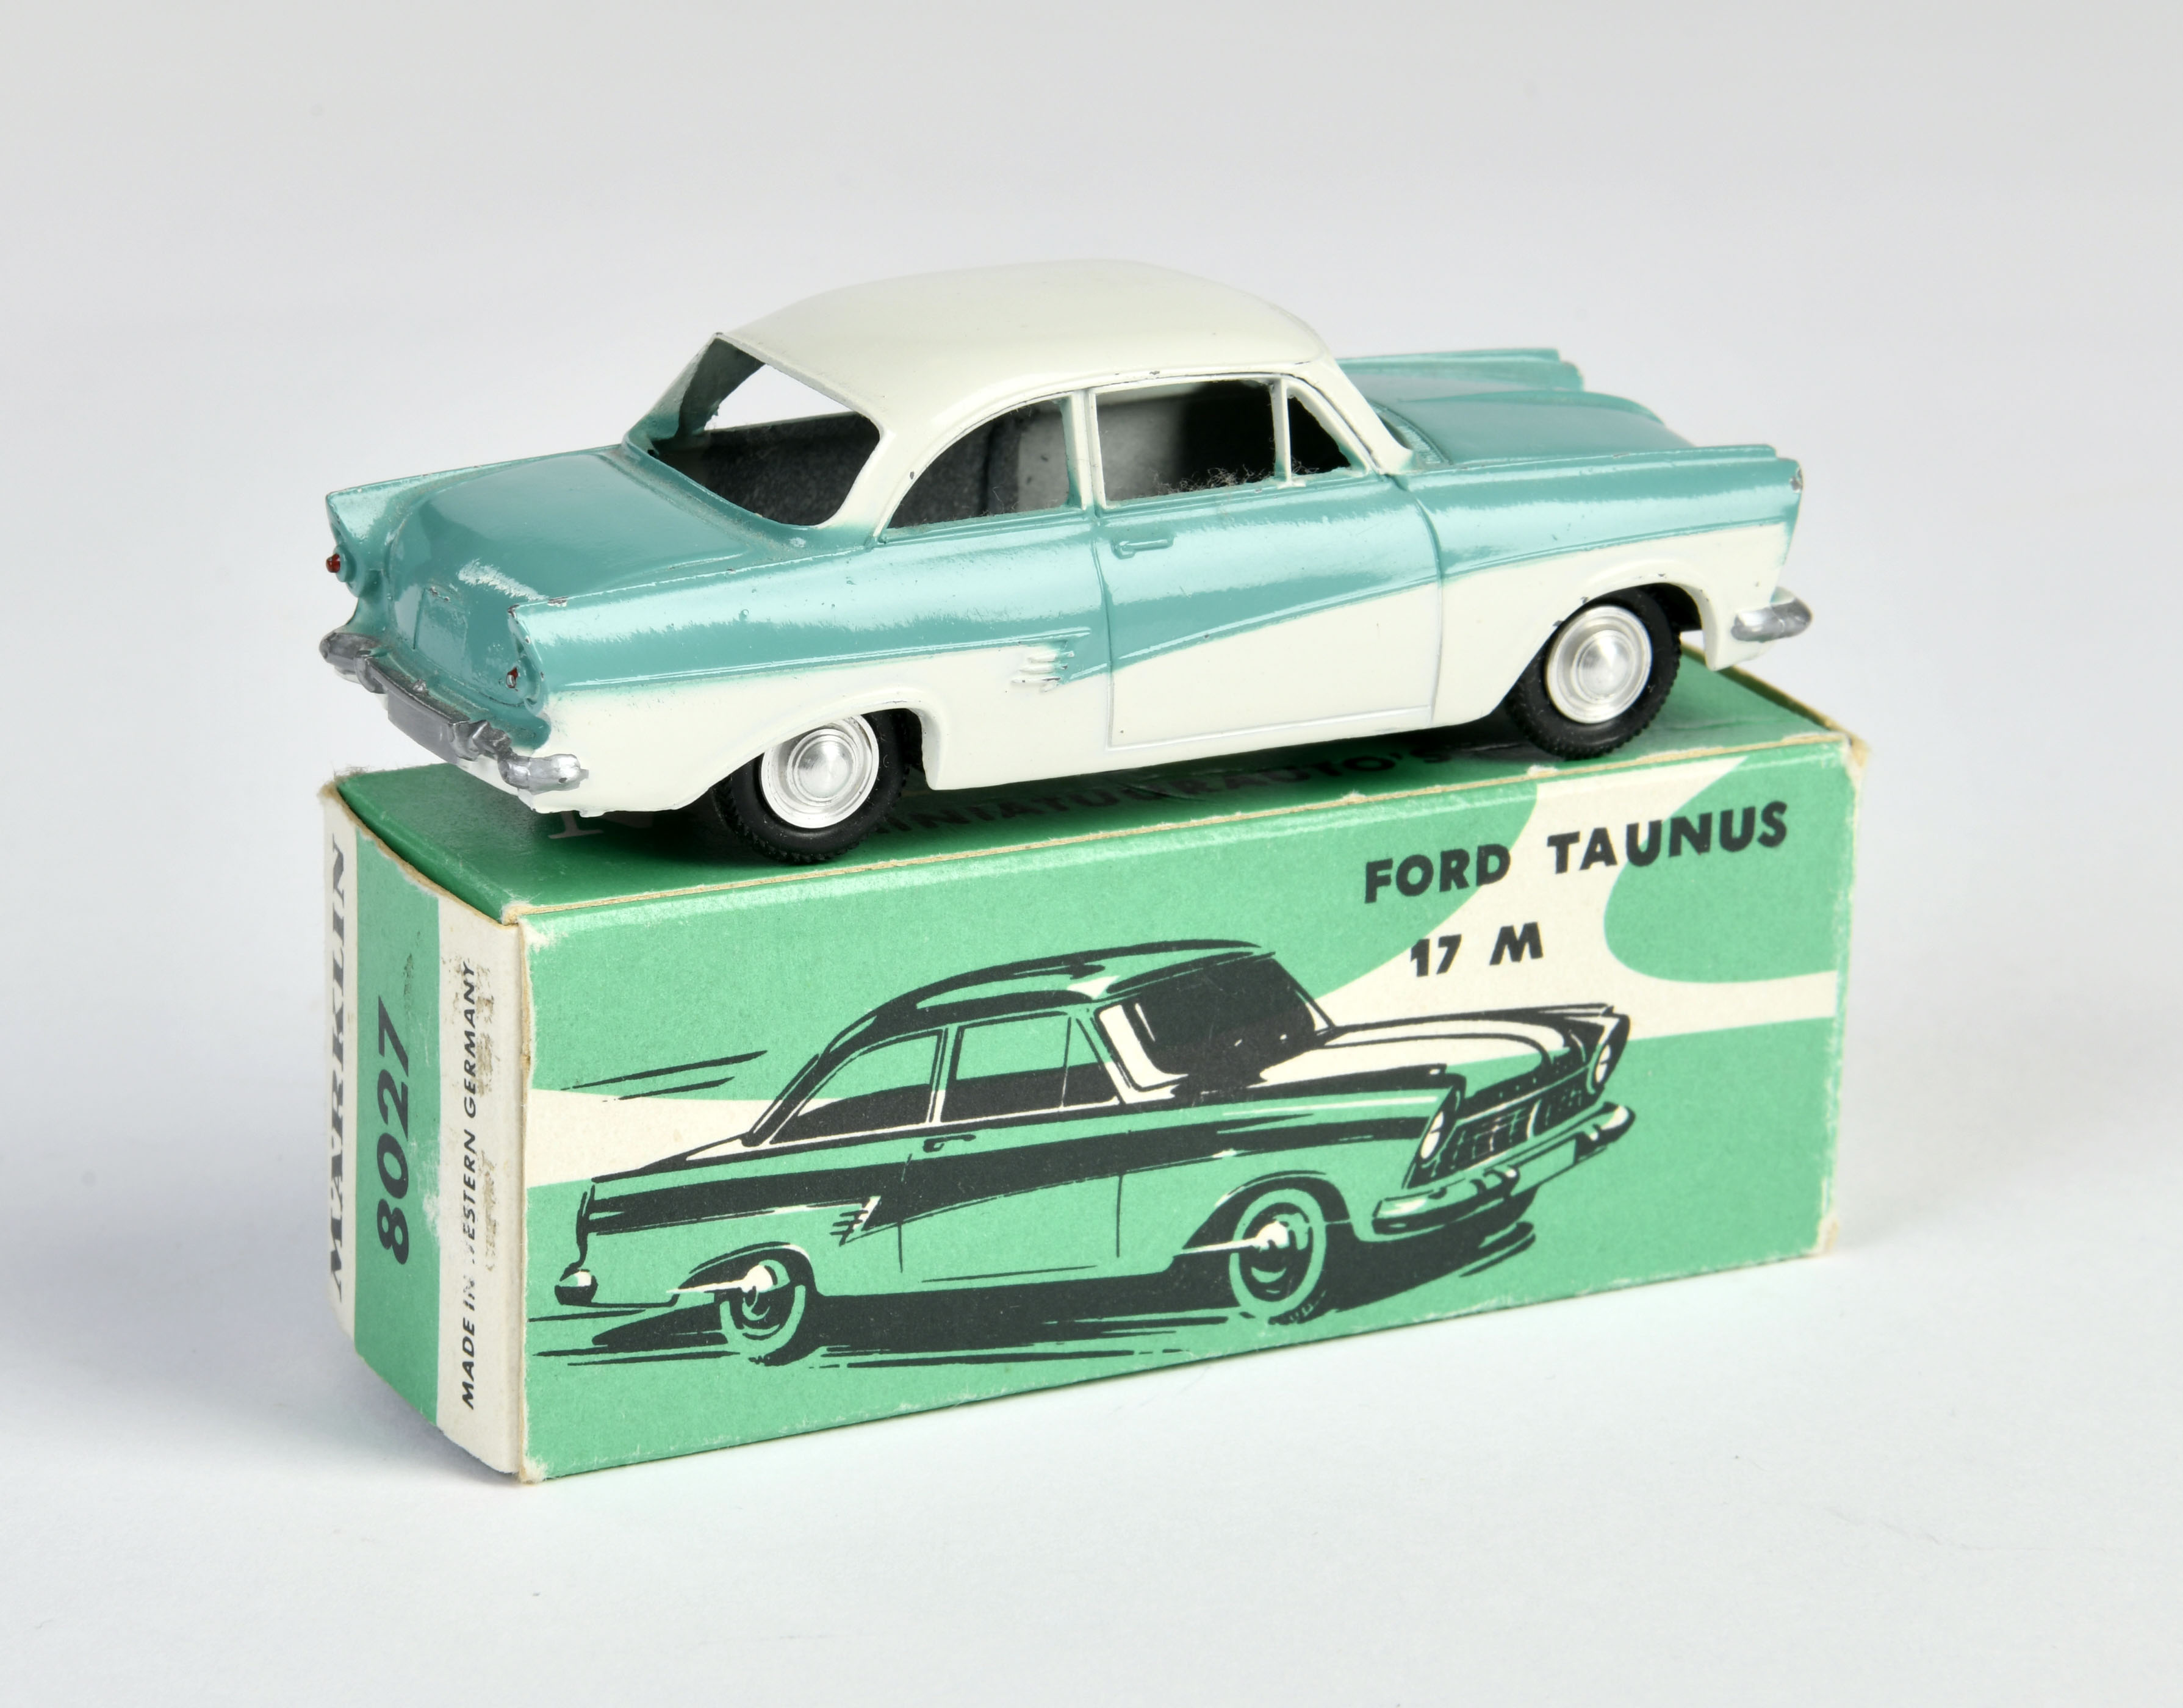 Märklin, Ford Taunus 17 M de Luxe, W.-Germany, 1:43, diecast, box C 1-, C 1 - Image 2 of 2